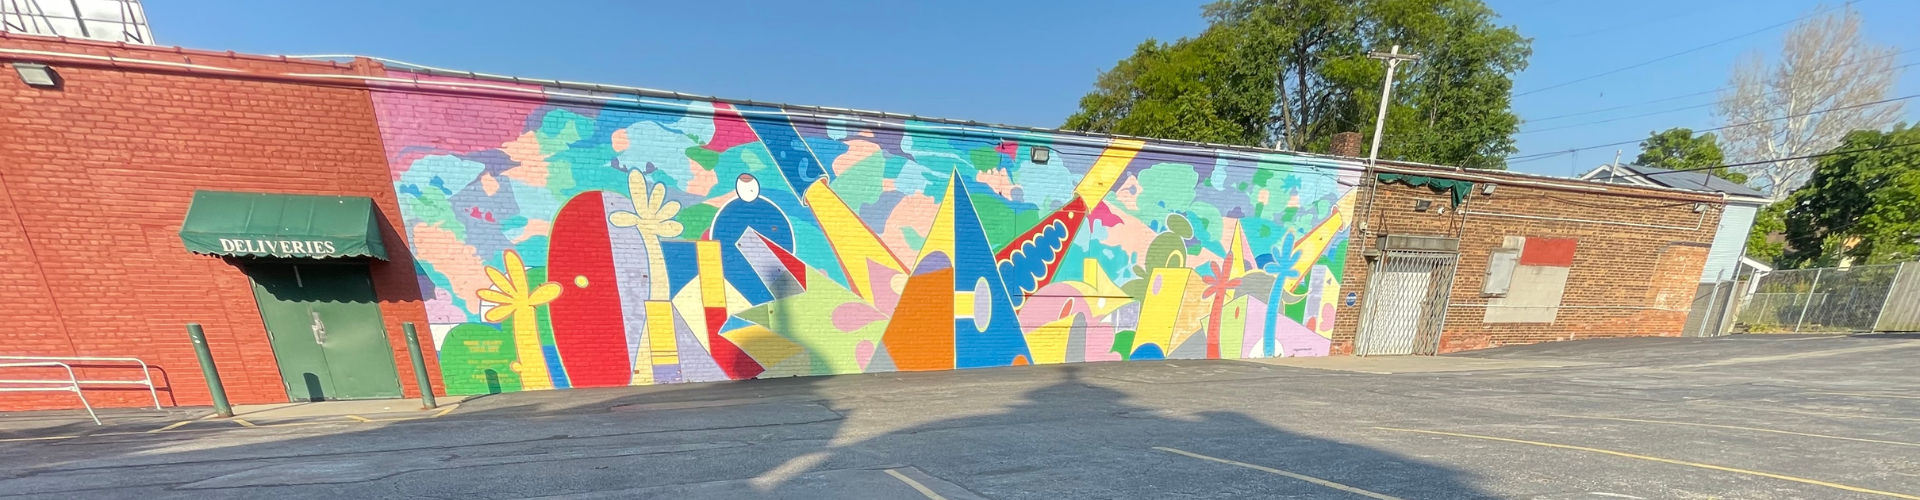 mural on a building near a parking garage